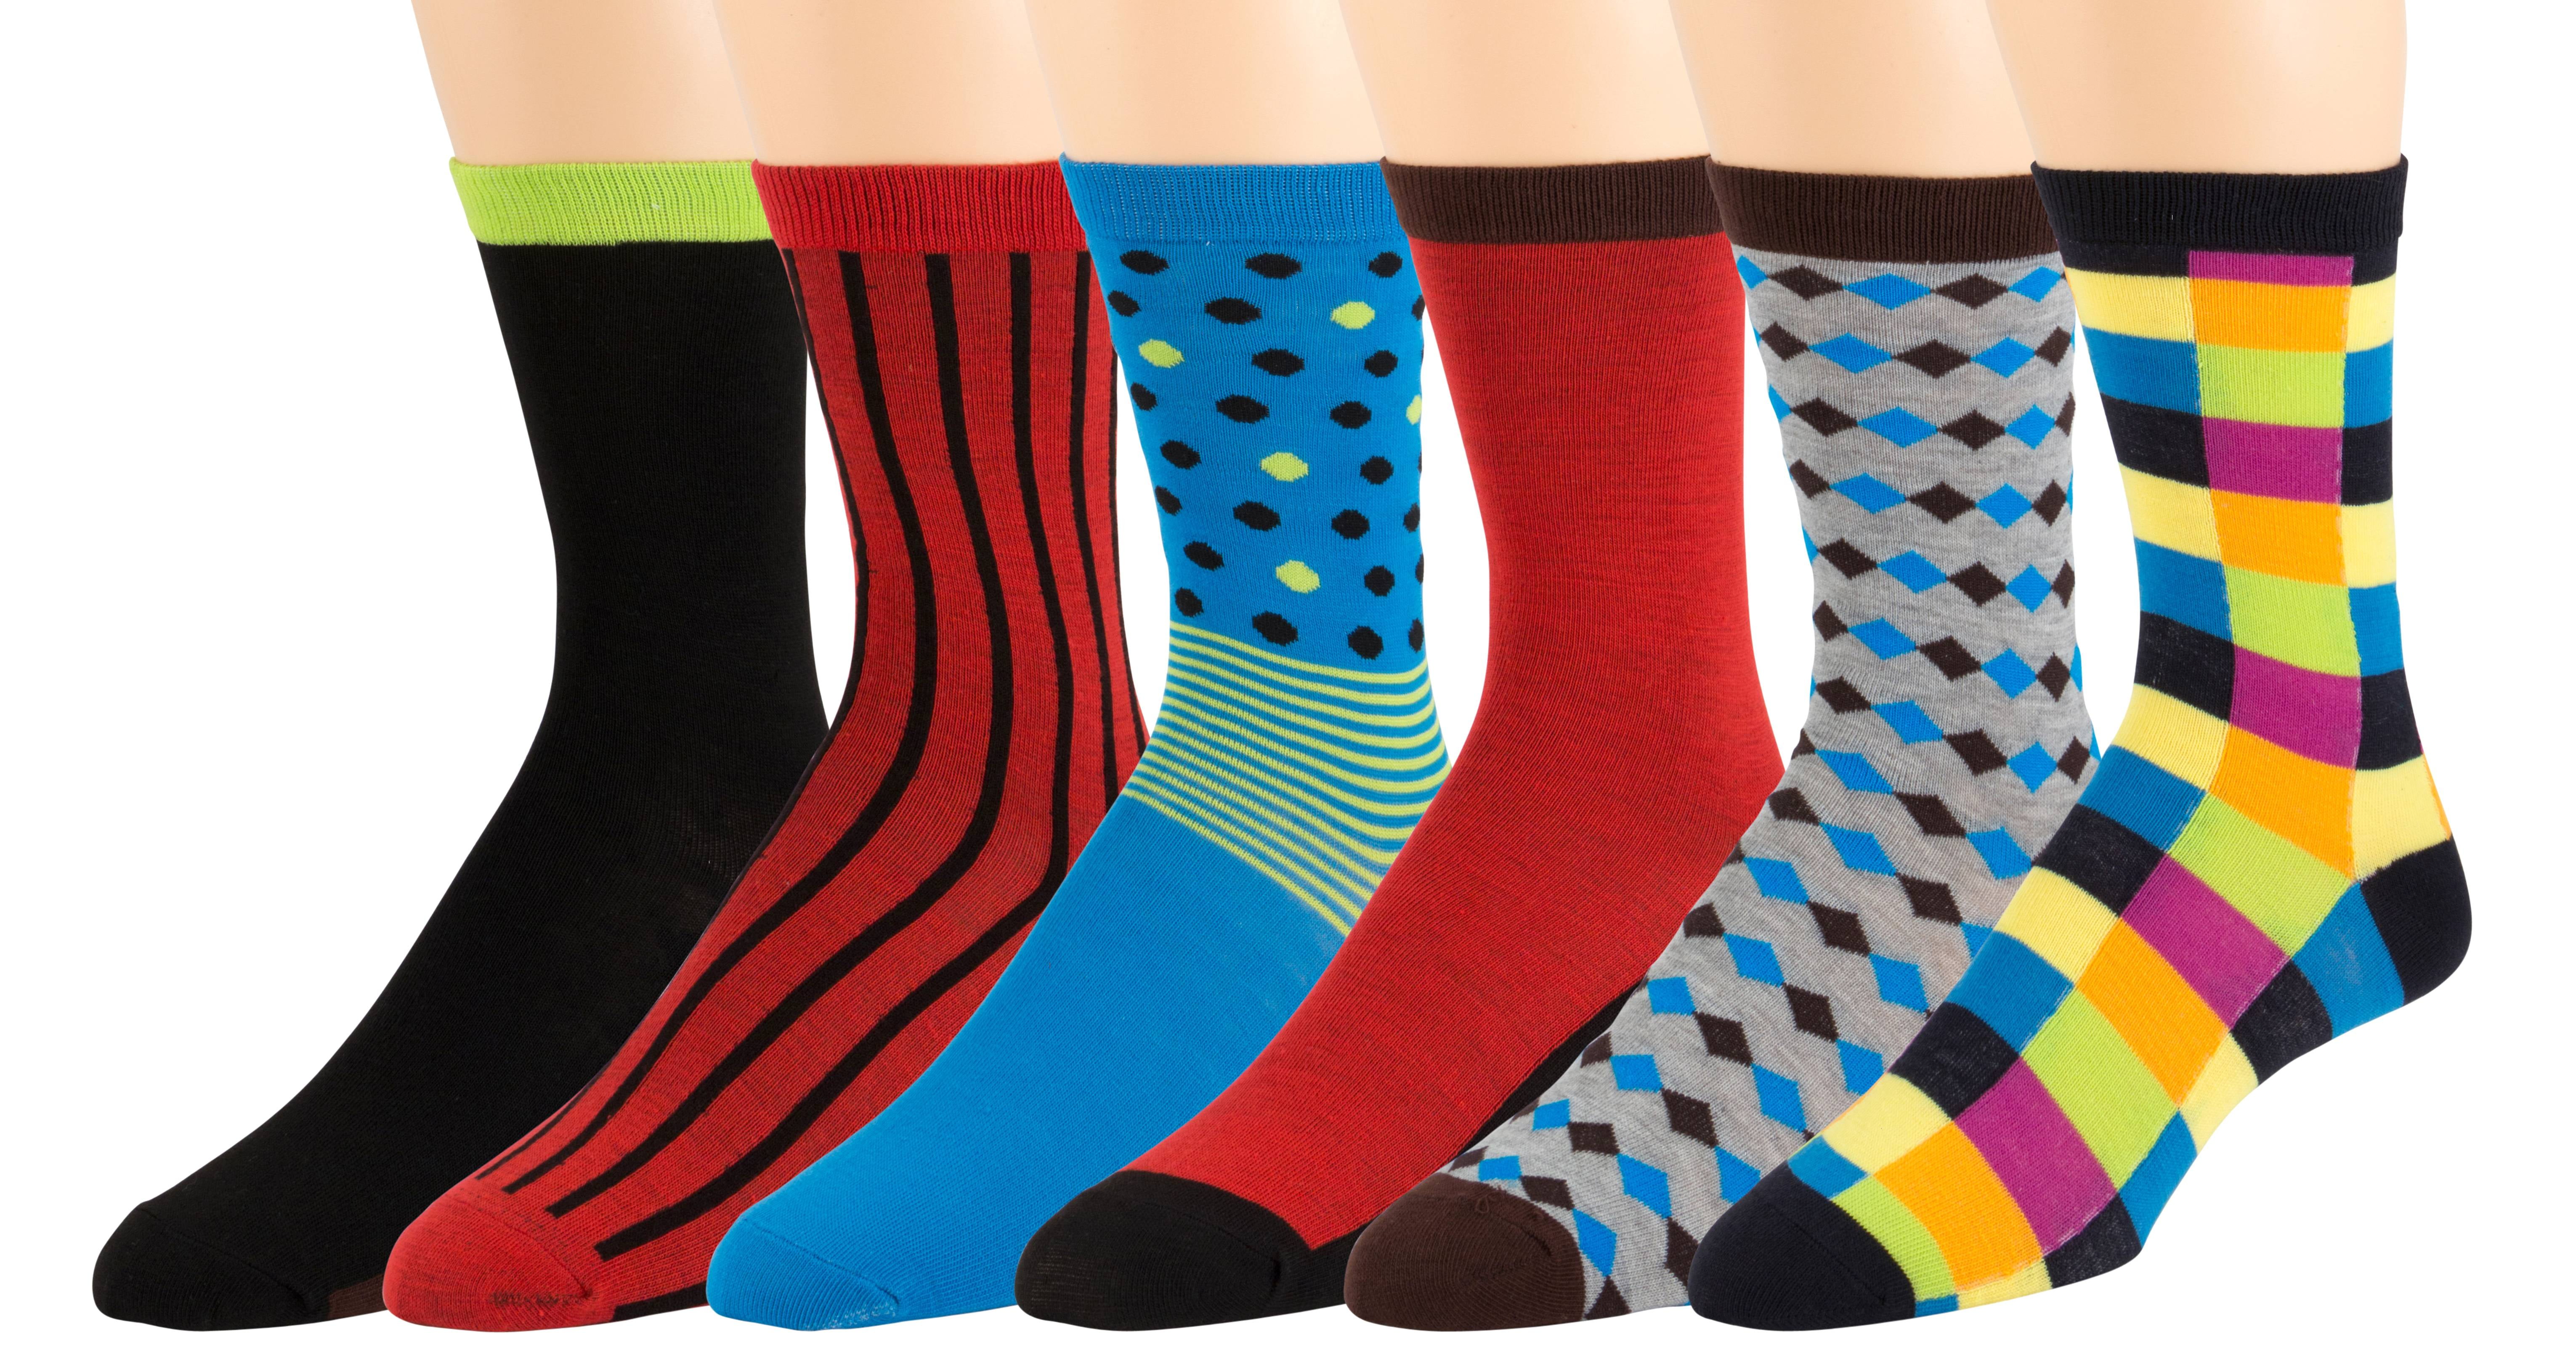 Zeke Mens Pattern Dress Funky Fun Colorful Socks 6 Assorted Patterns